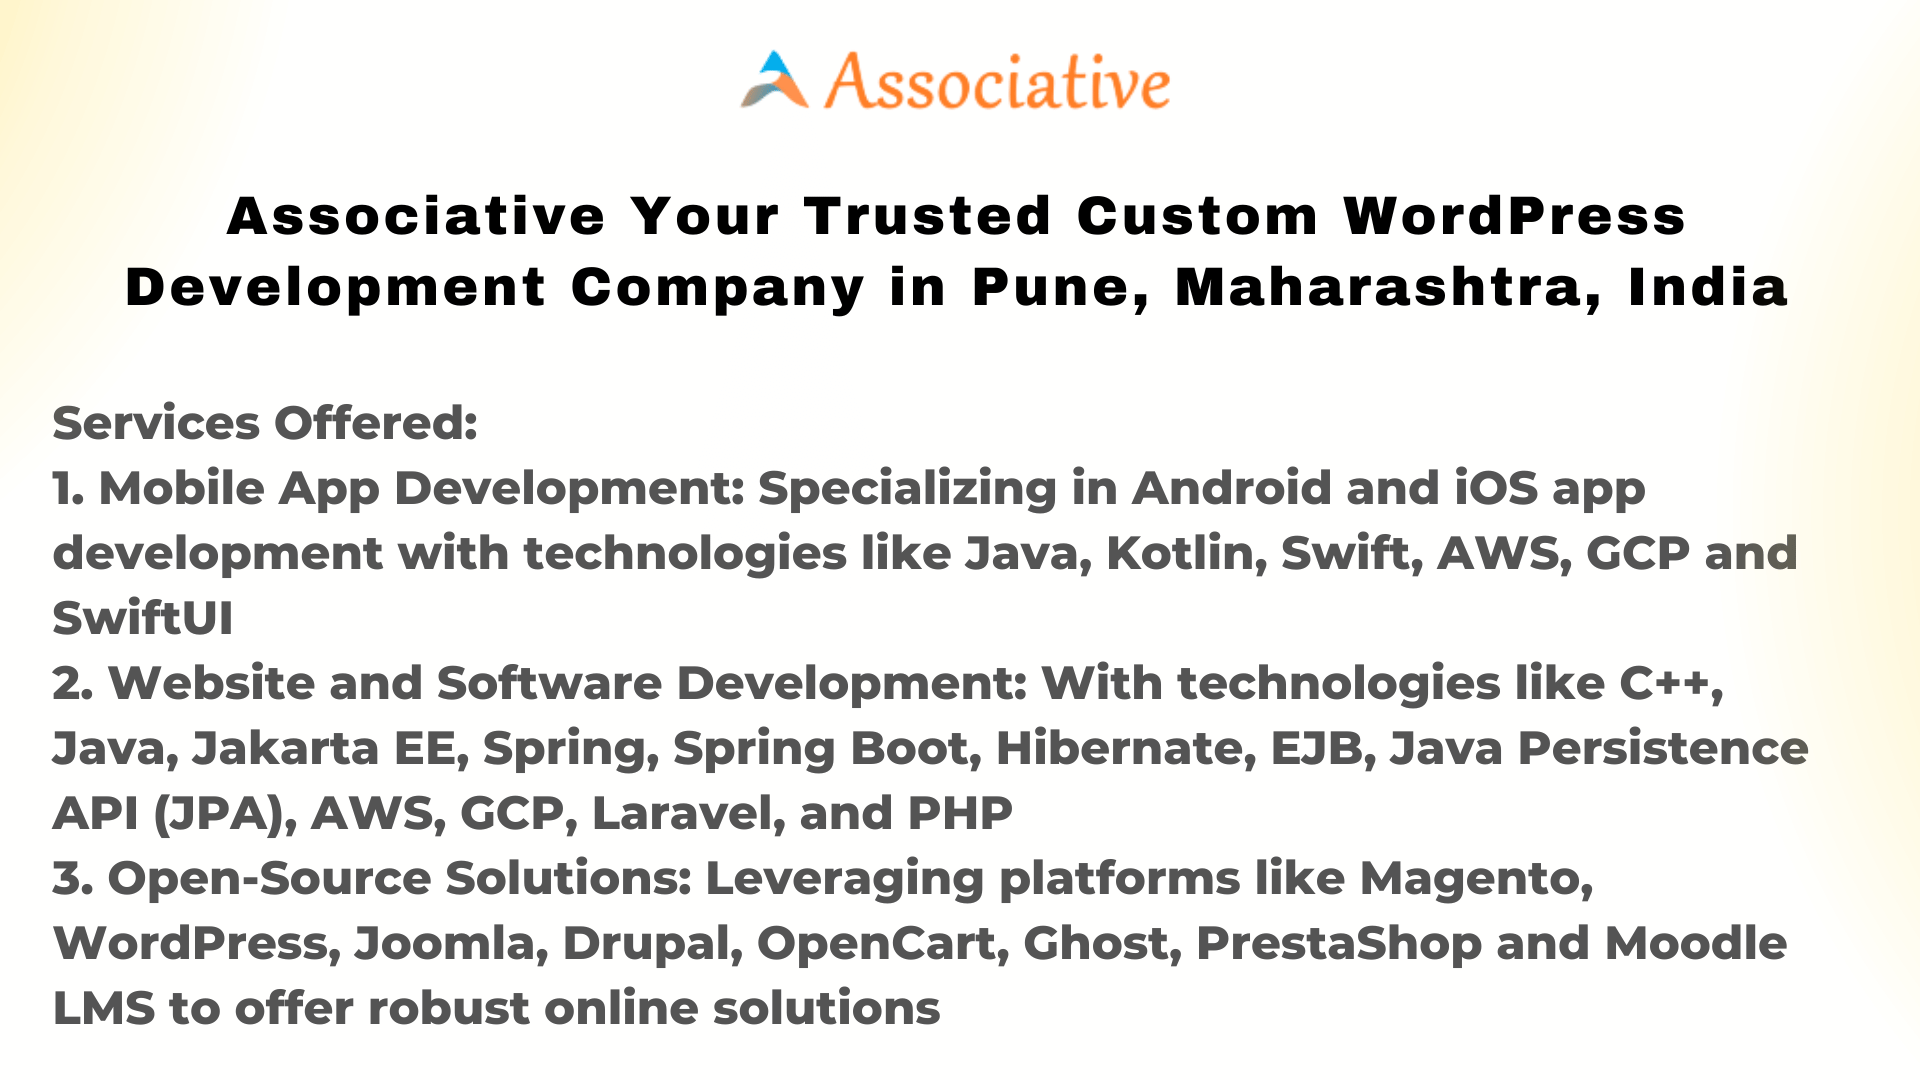 Associative Your Trusted Custom WordPress Development Company in Pune Maharashtra India